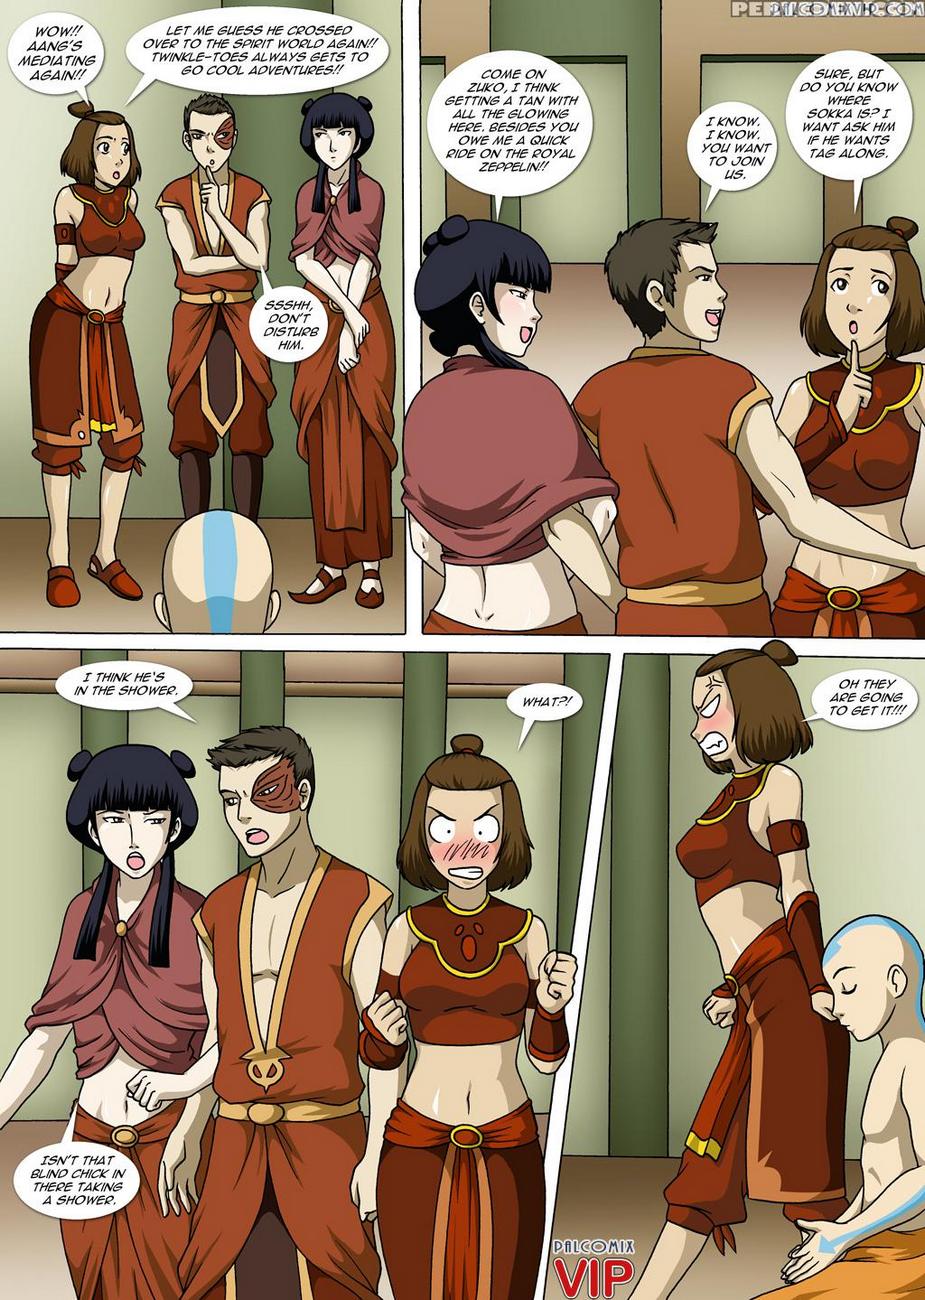 8-muses-Avatar-The-Last-Jizzbender-Book-XXX-2 comic image 8